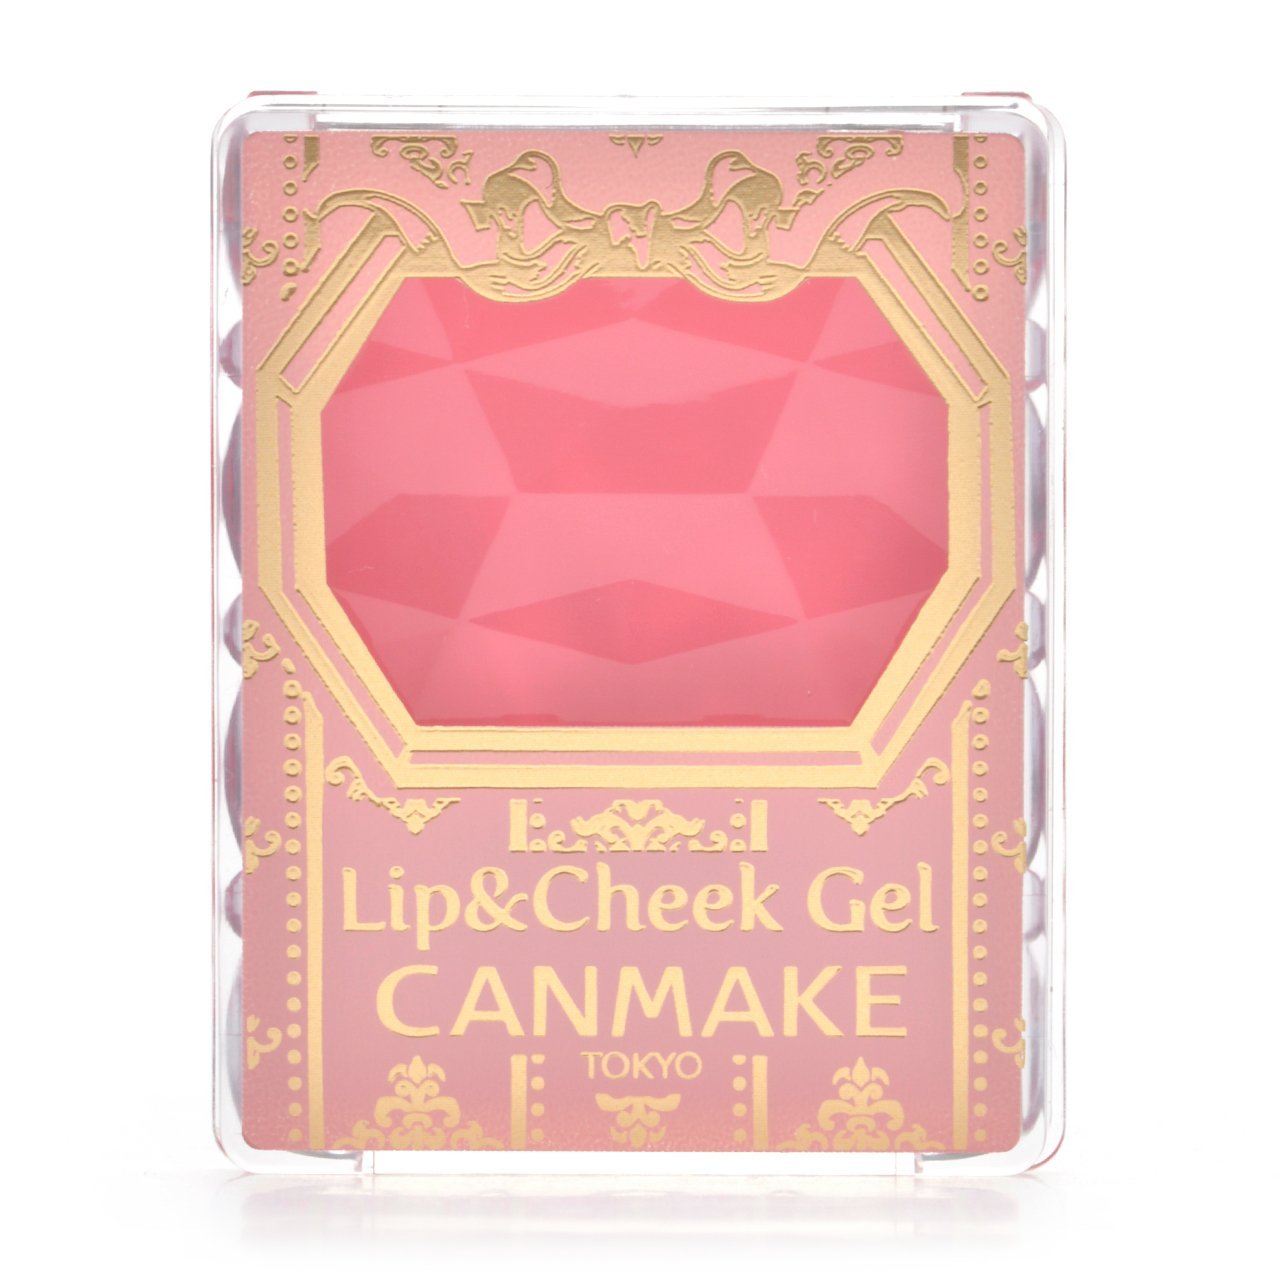 Canmake Lip and Cheek Gel - Raspberry Float Shade 03 1.5G